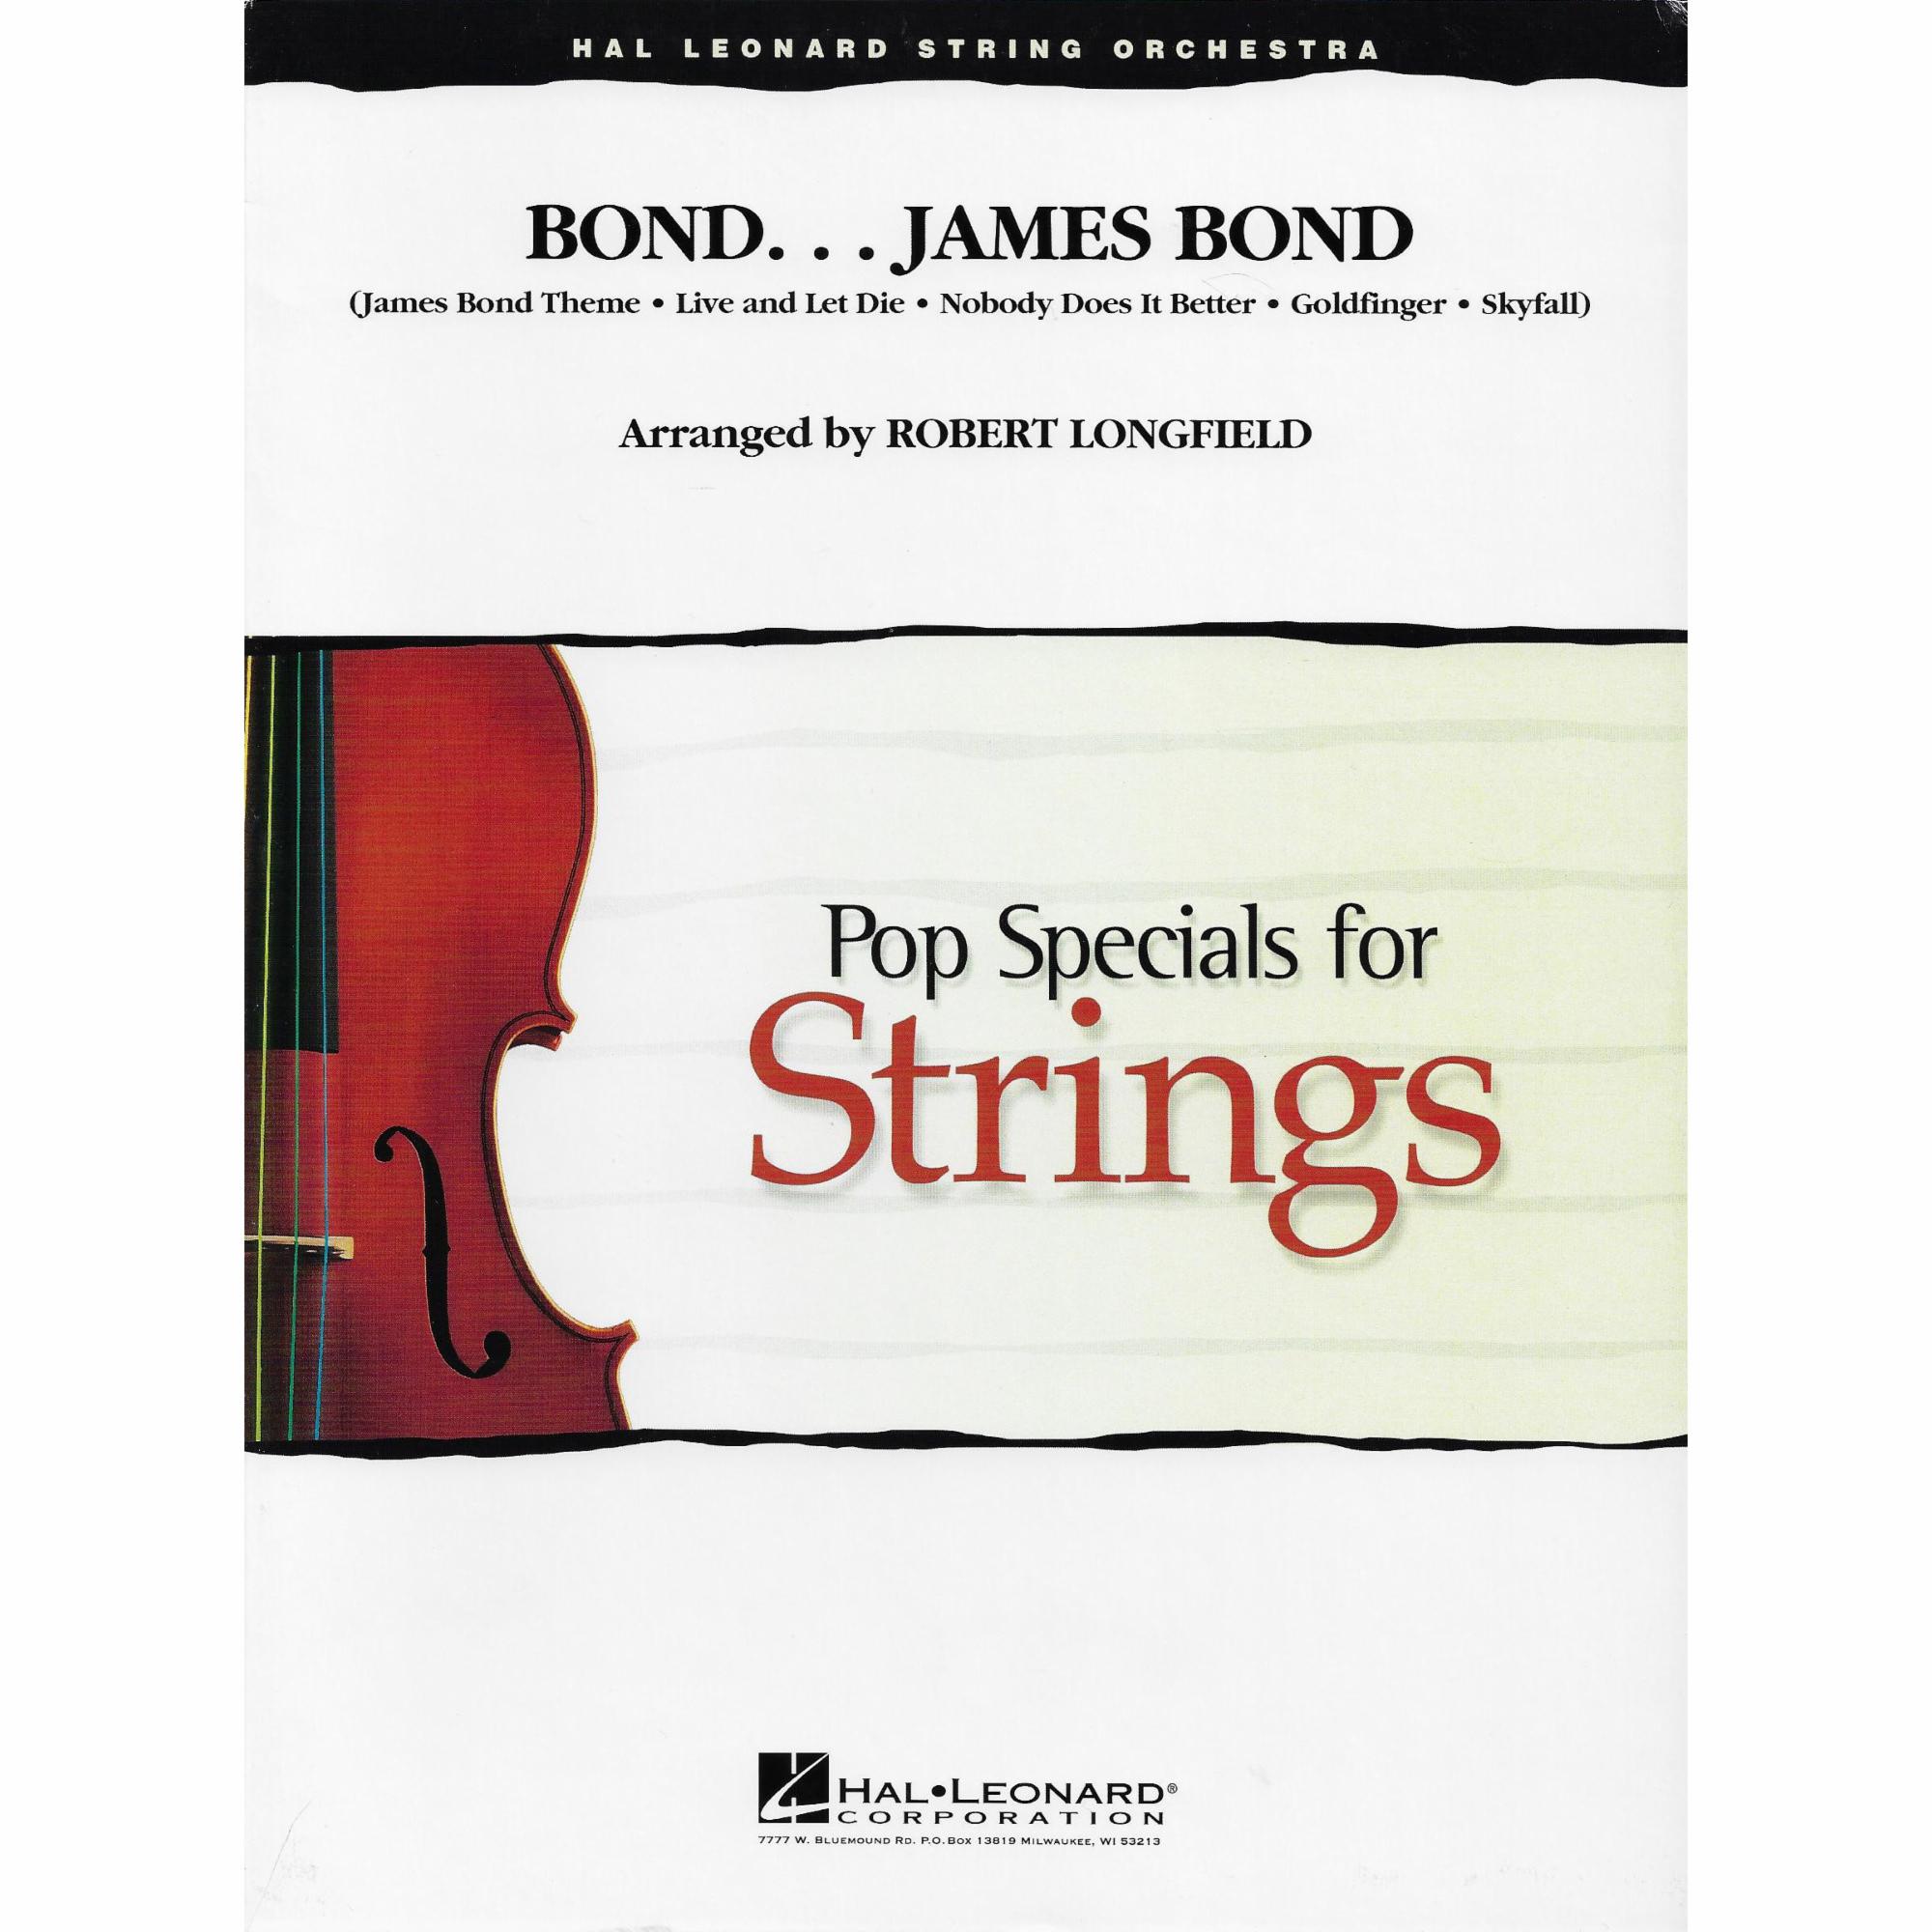 Bond...James Bond for String Orchestra